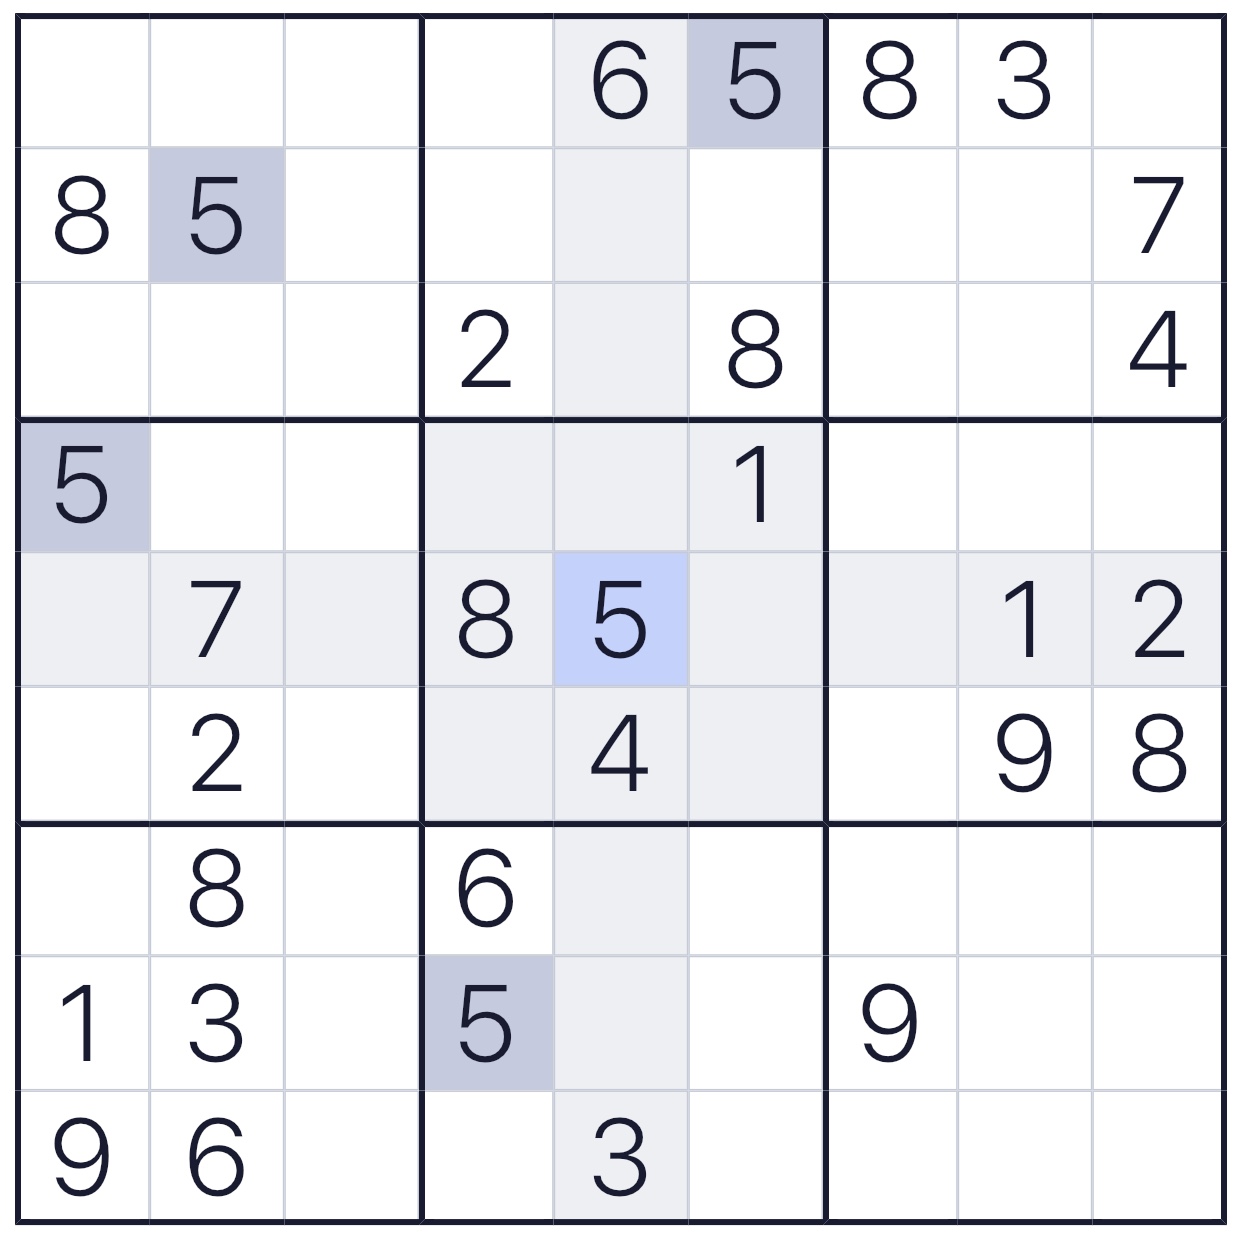 number sudoku games